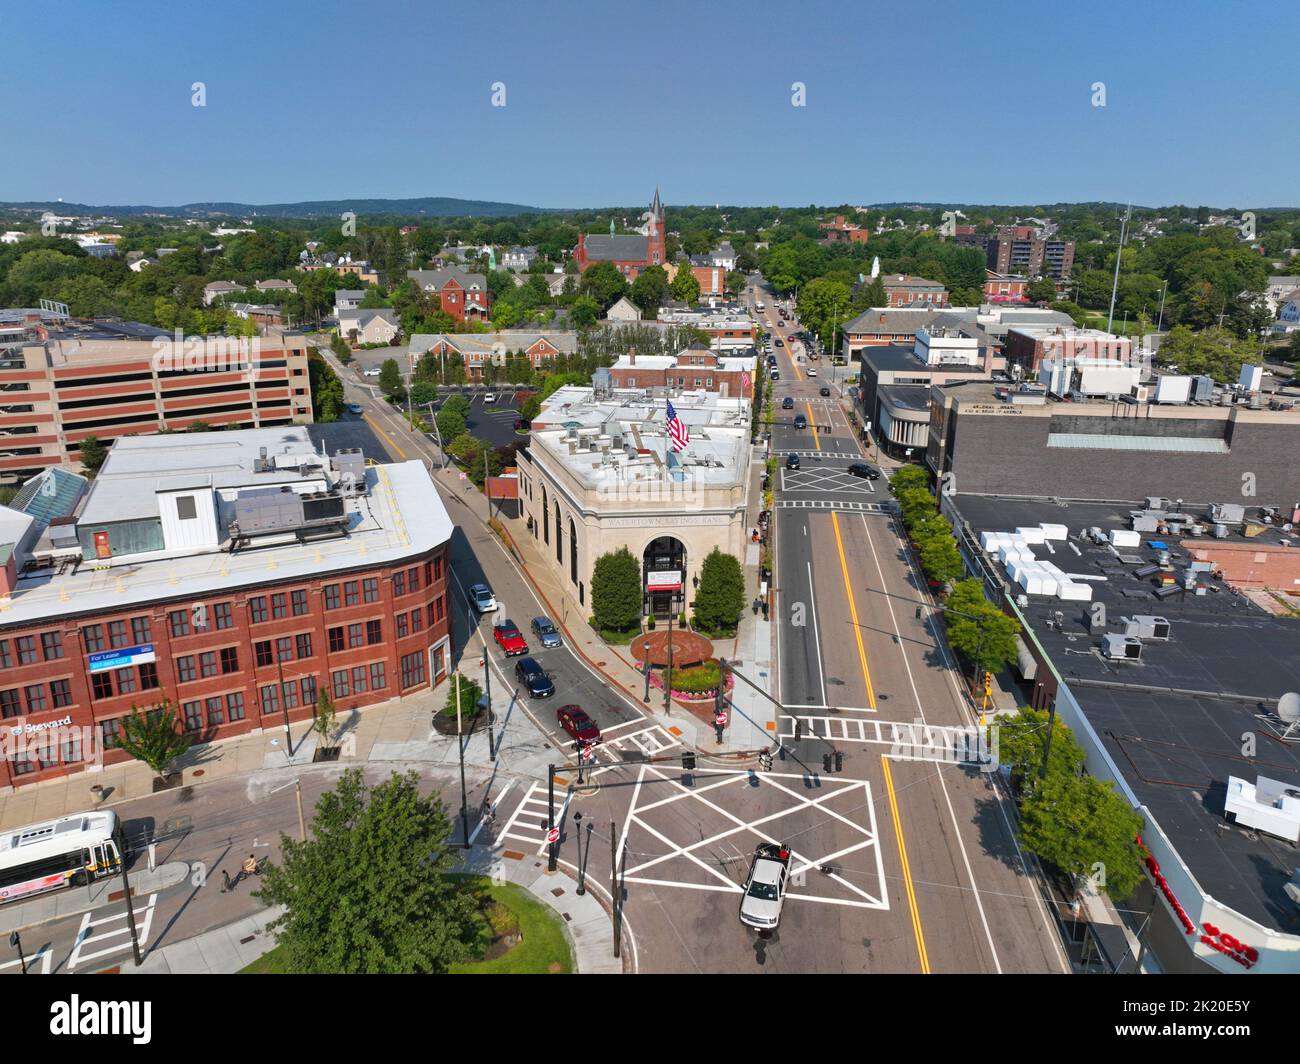 Watertown Savings Bank aerial view at 60 Main Street in historic city center of Watertown, Massachusetts MA, USA. Stock Photo